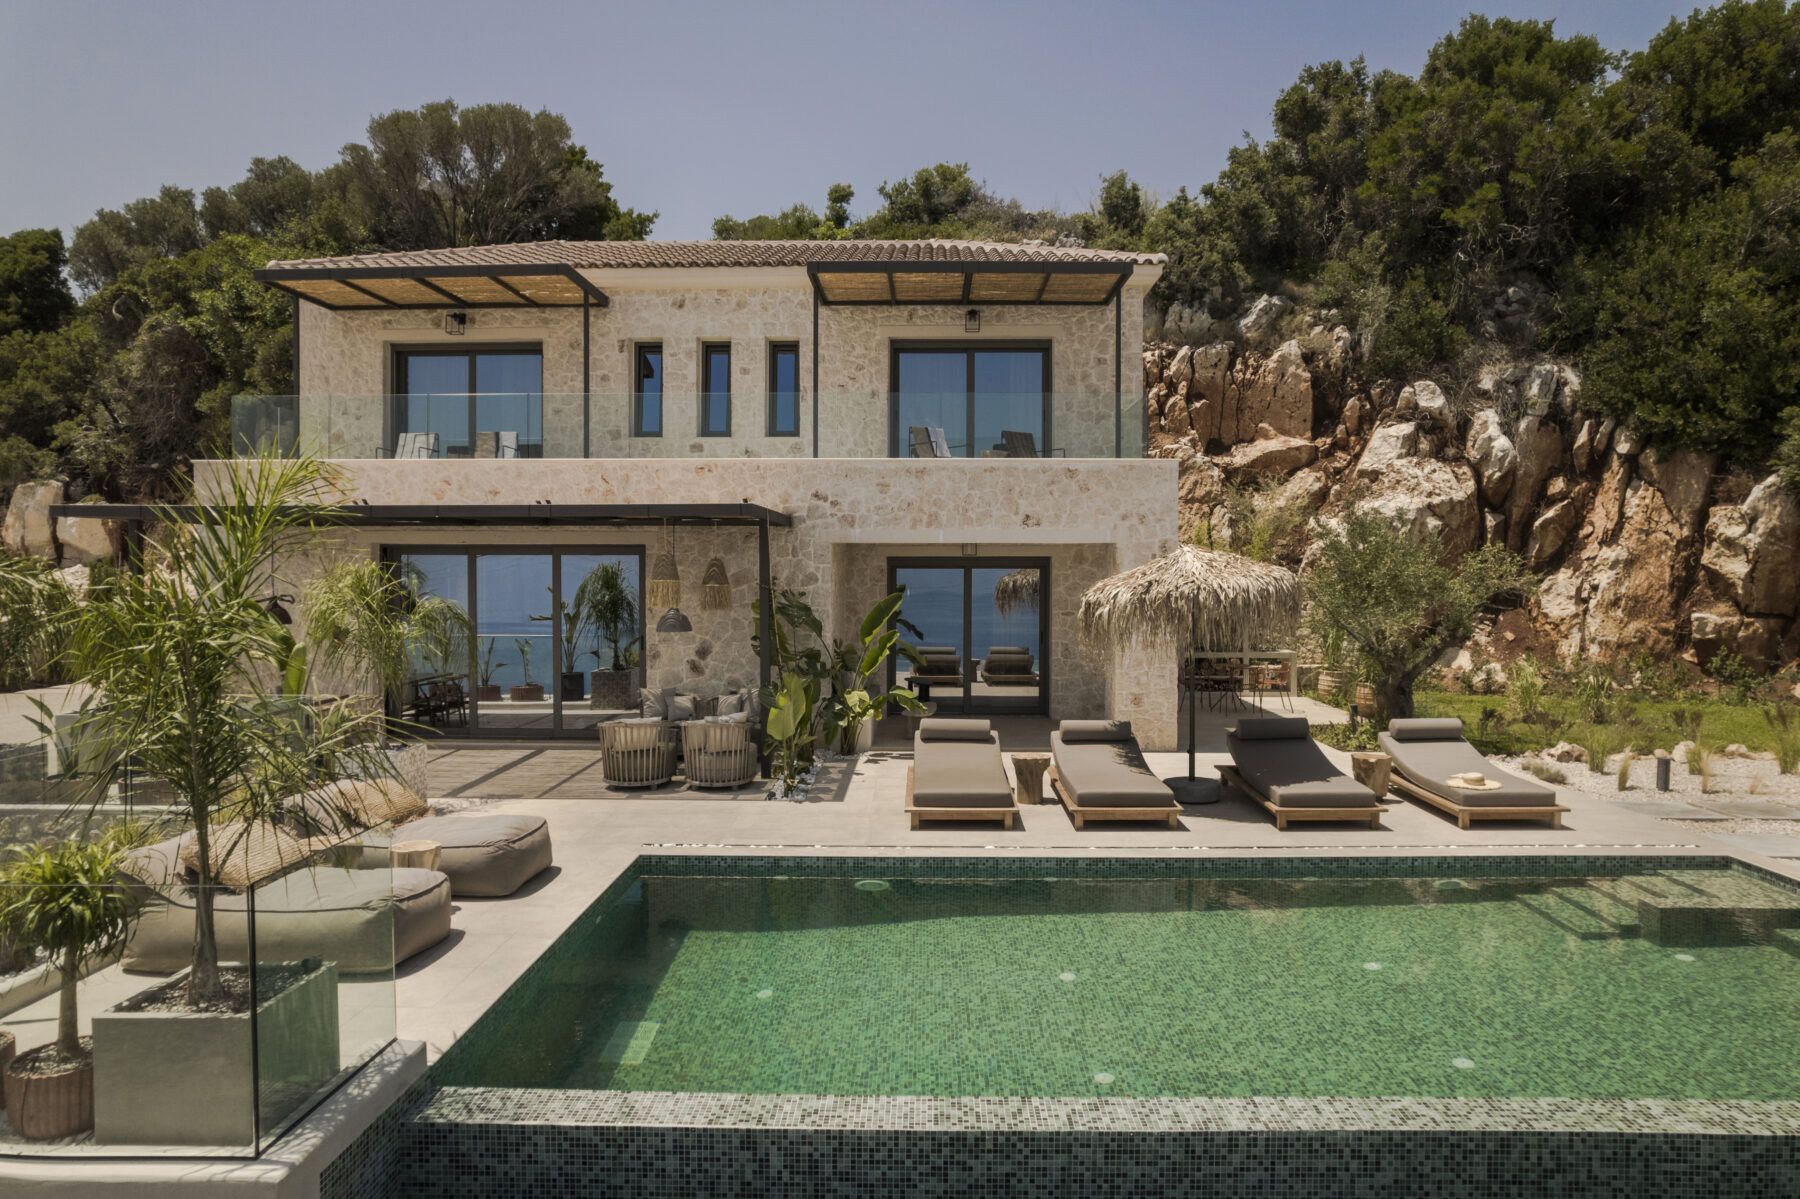 Archisearch Villa Esperanza 2 | A summer residence in Kefalonia designed by Angelos Kompothekras & Andreas Debonos